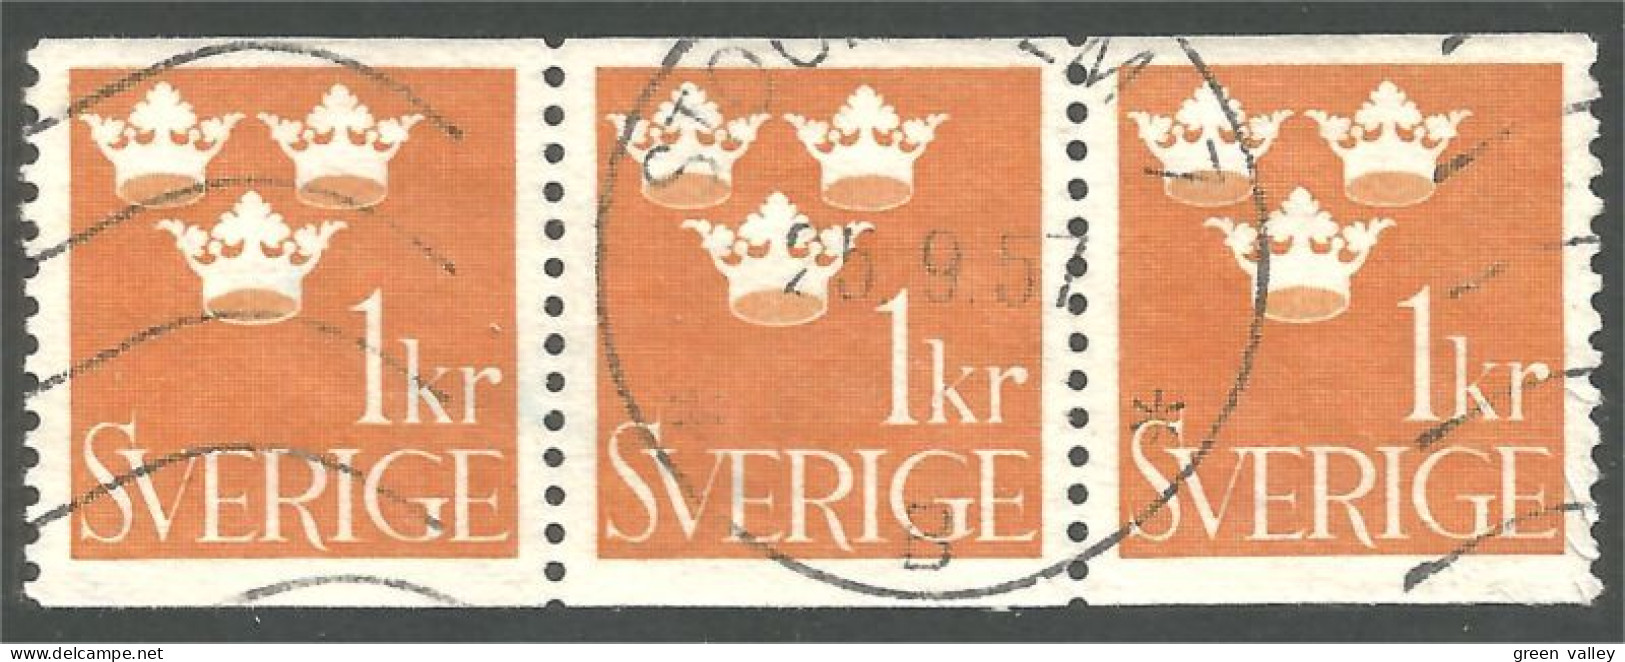 840 Sweden 1939 Trois Couronnes Three Crowns 1kr Orange Bande Strip 3 (SWE-426) - Used Stamps